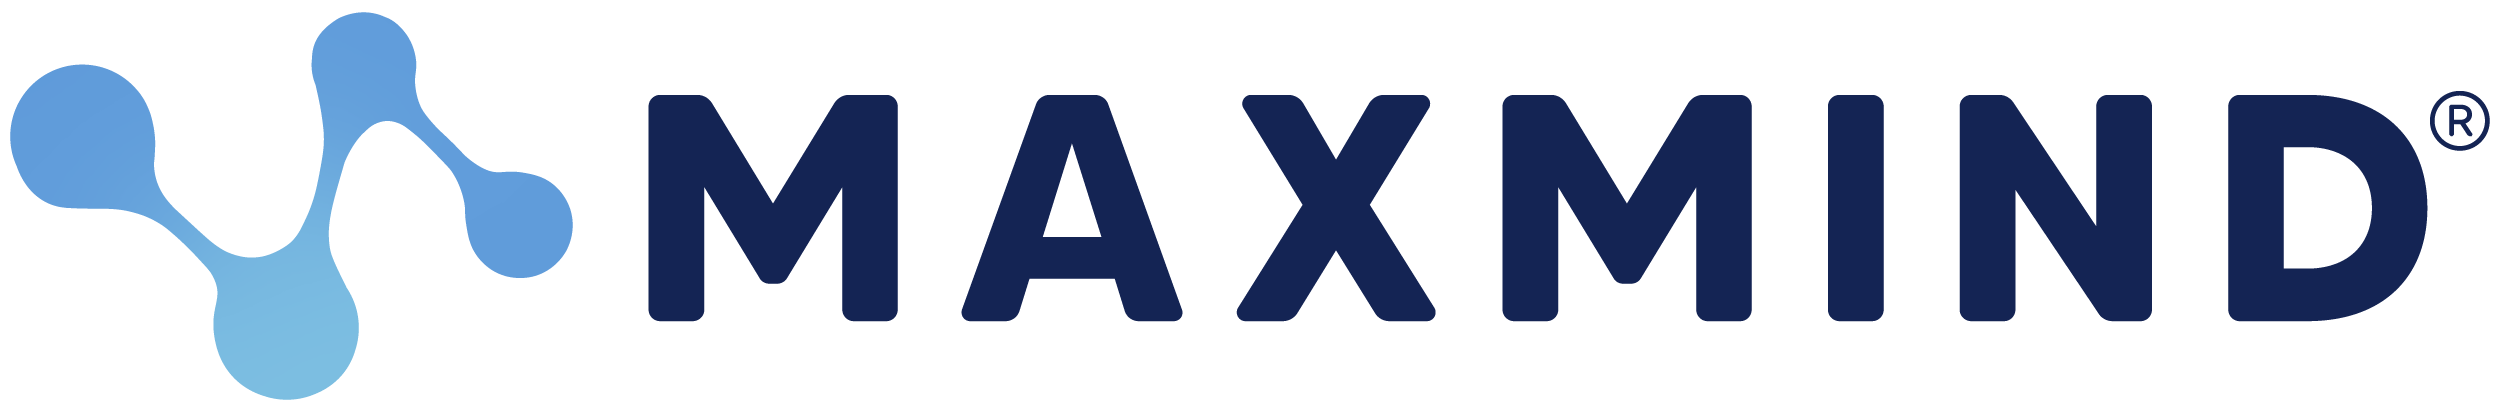 MaxMind logo.